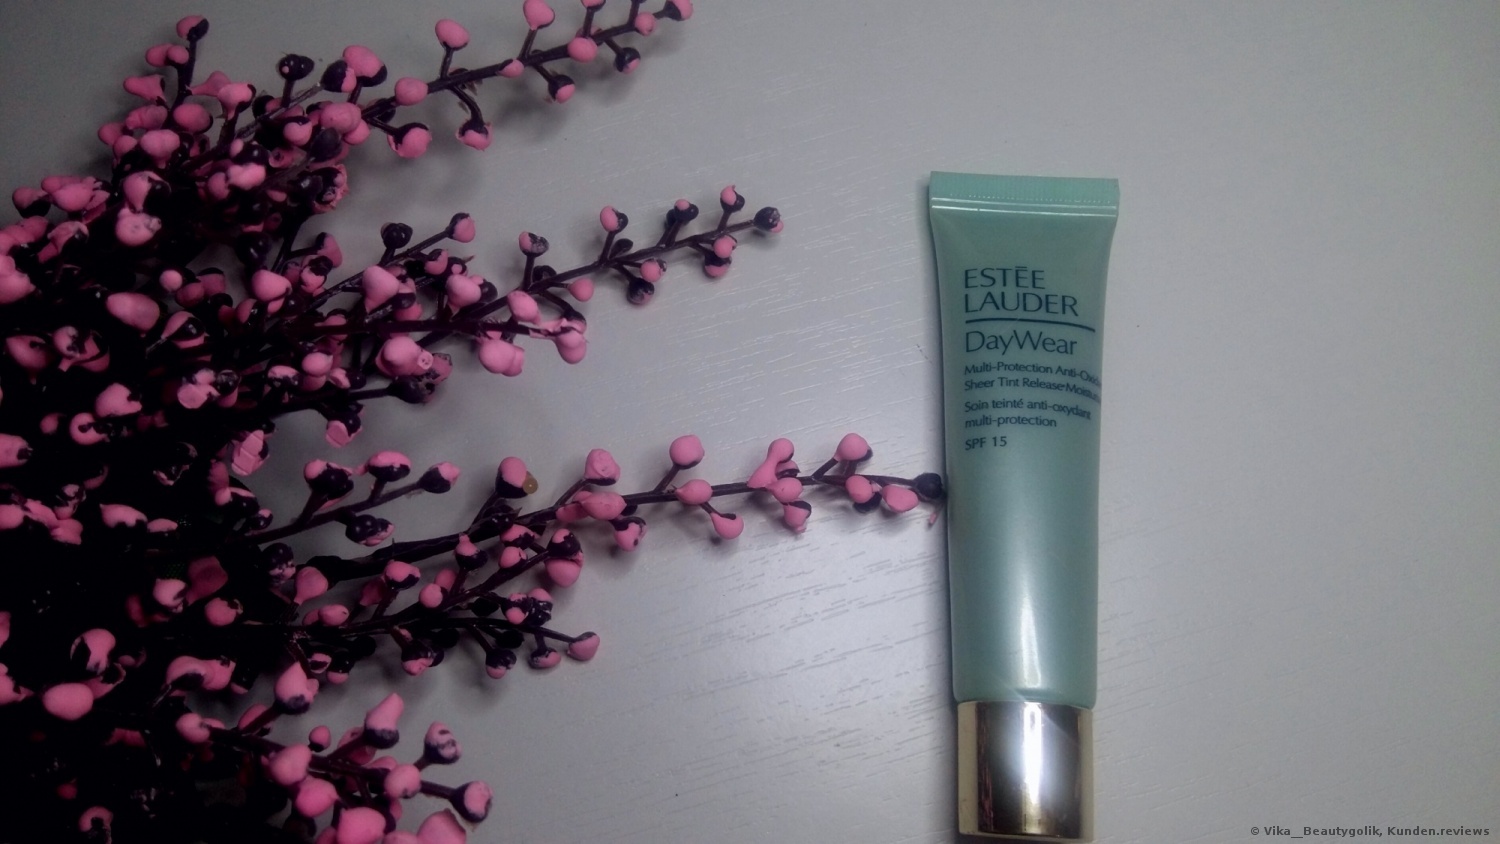  Estee Lauder DayWear Multi-Protection Anti-Oxidant Sheer Tint Release Moisturizer SPF 15